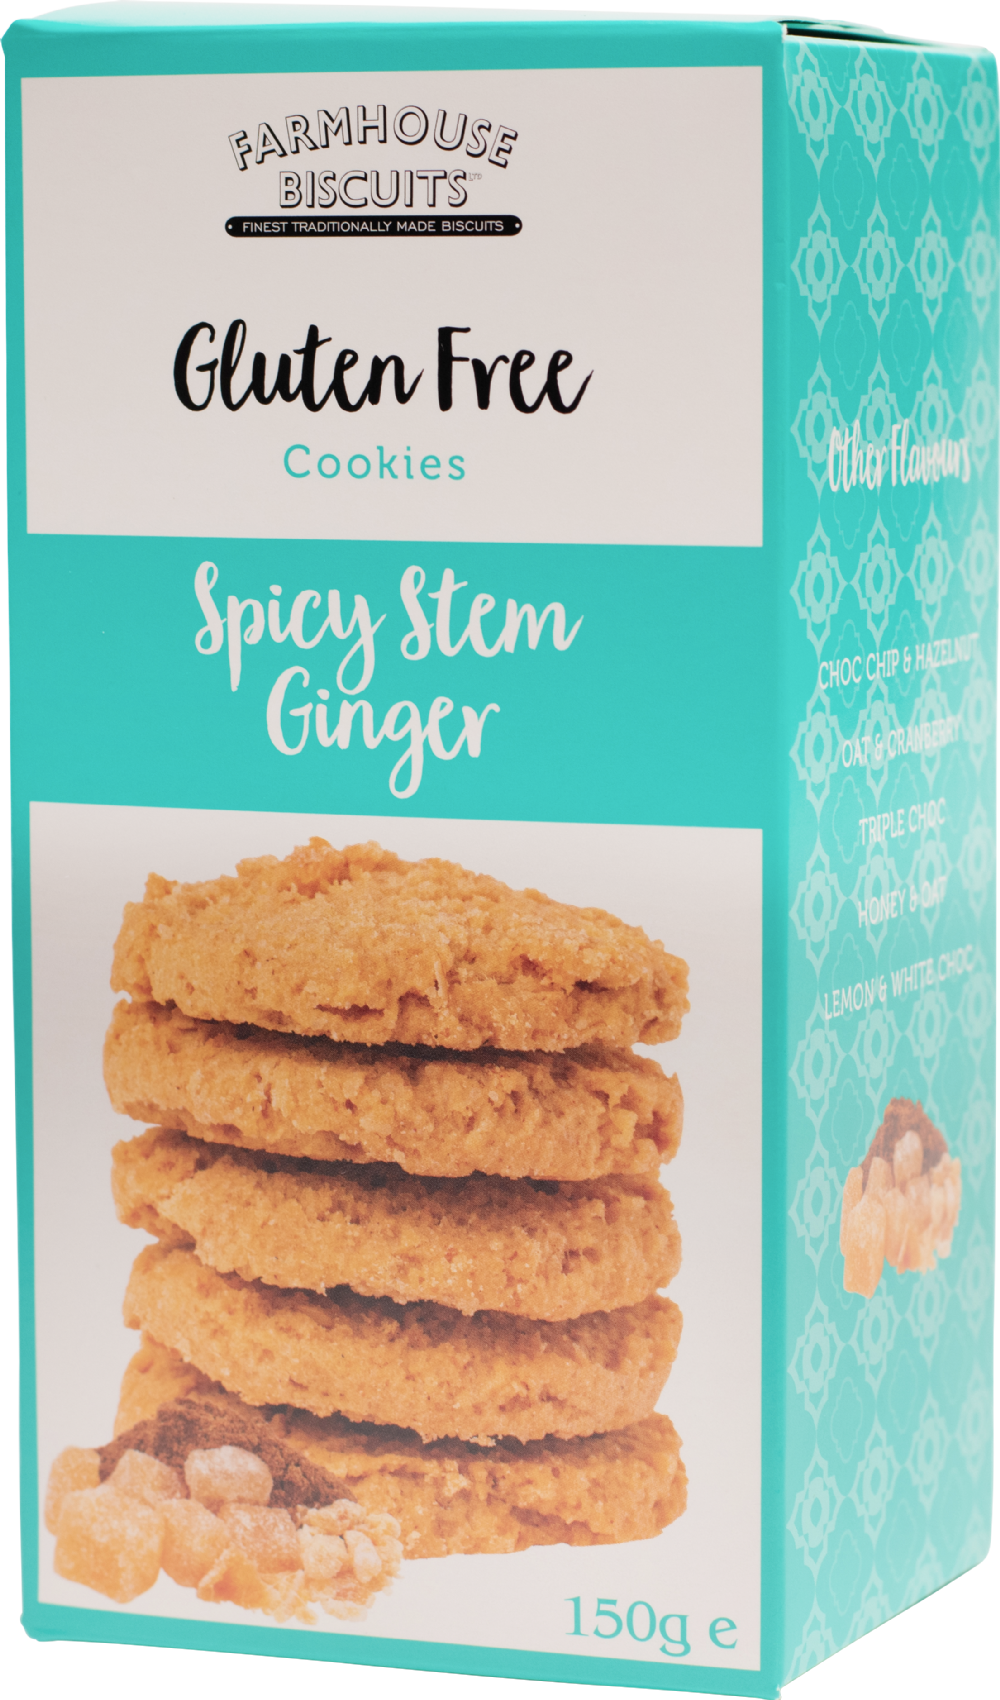 FARMHOUSE Gluten Free Spicy Stem Ginger Cookies 150g